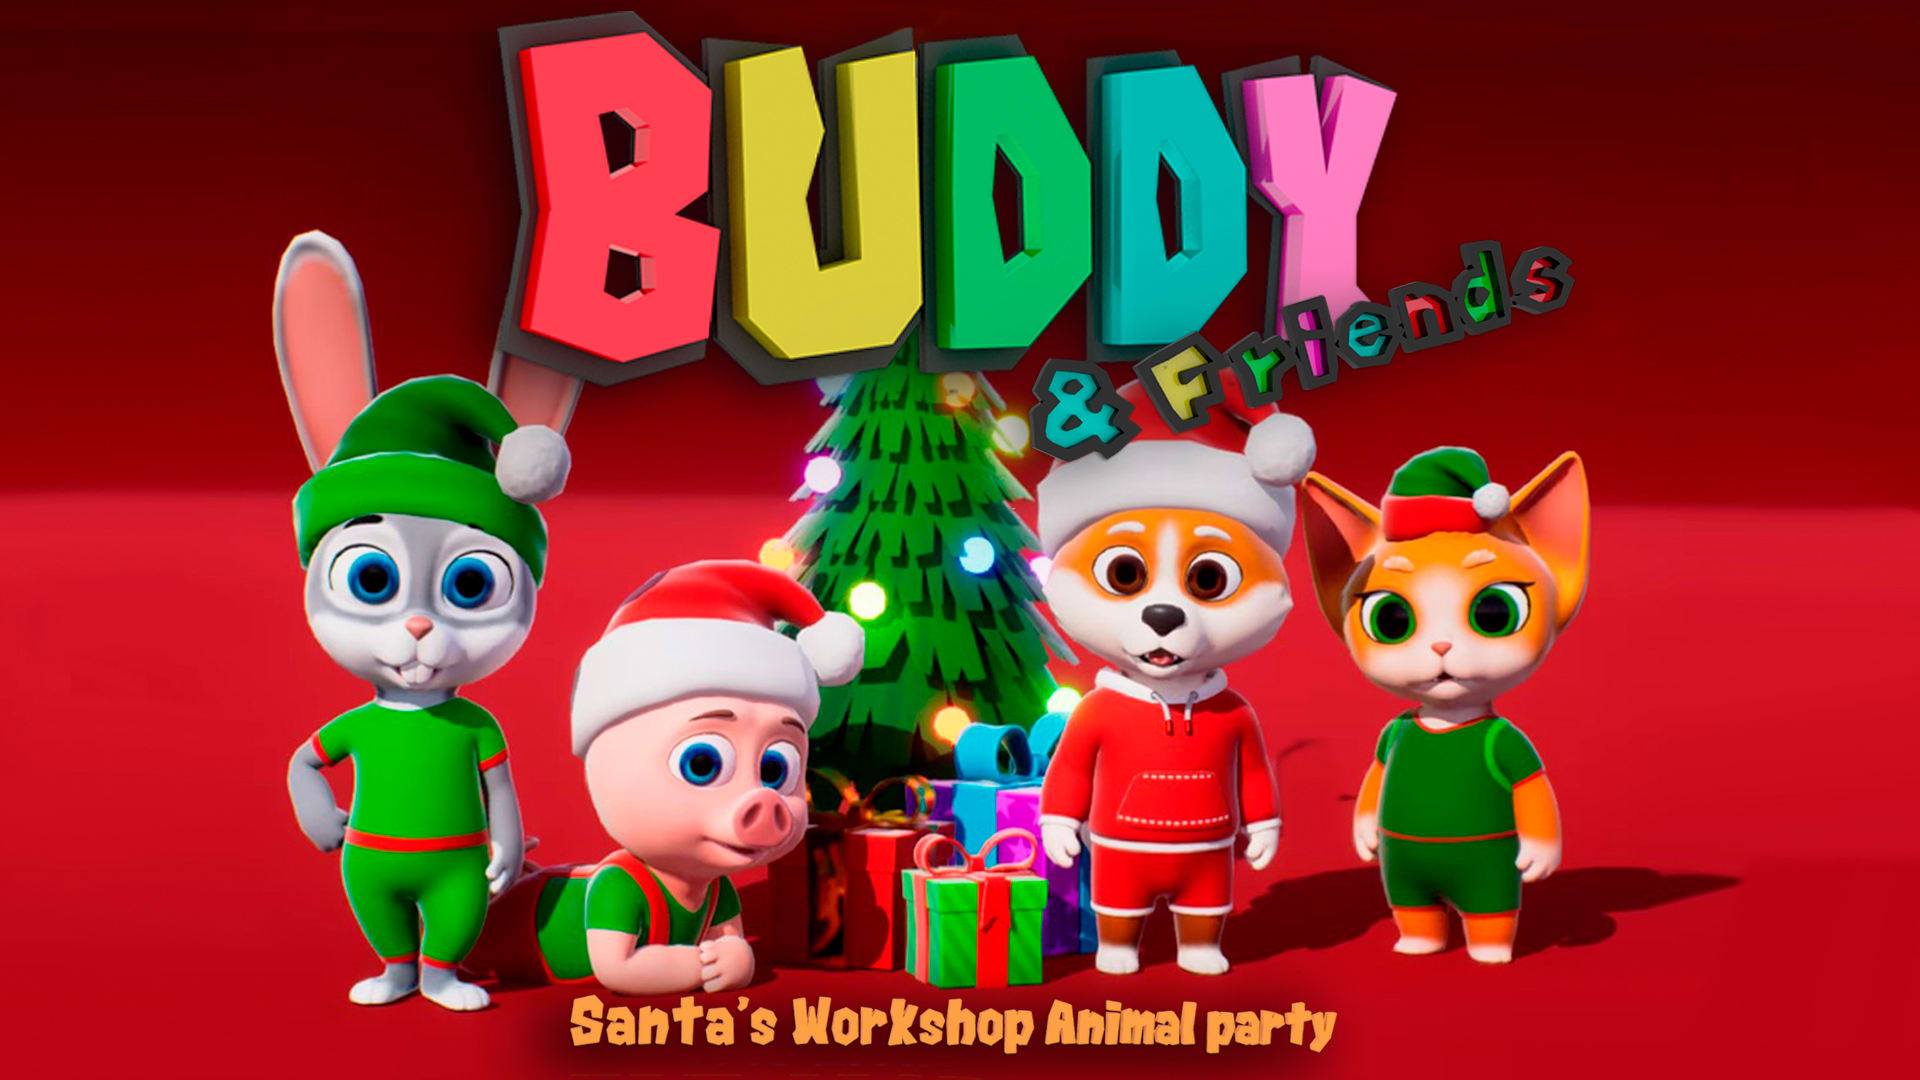 Buddy & Friends: Santa's Workshop Animal Party